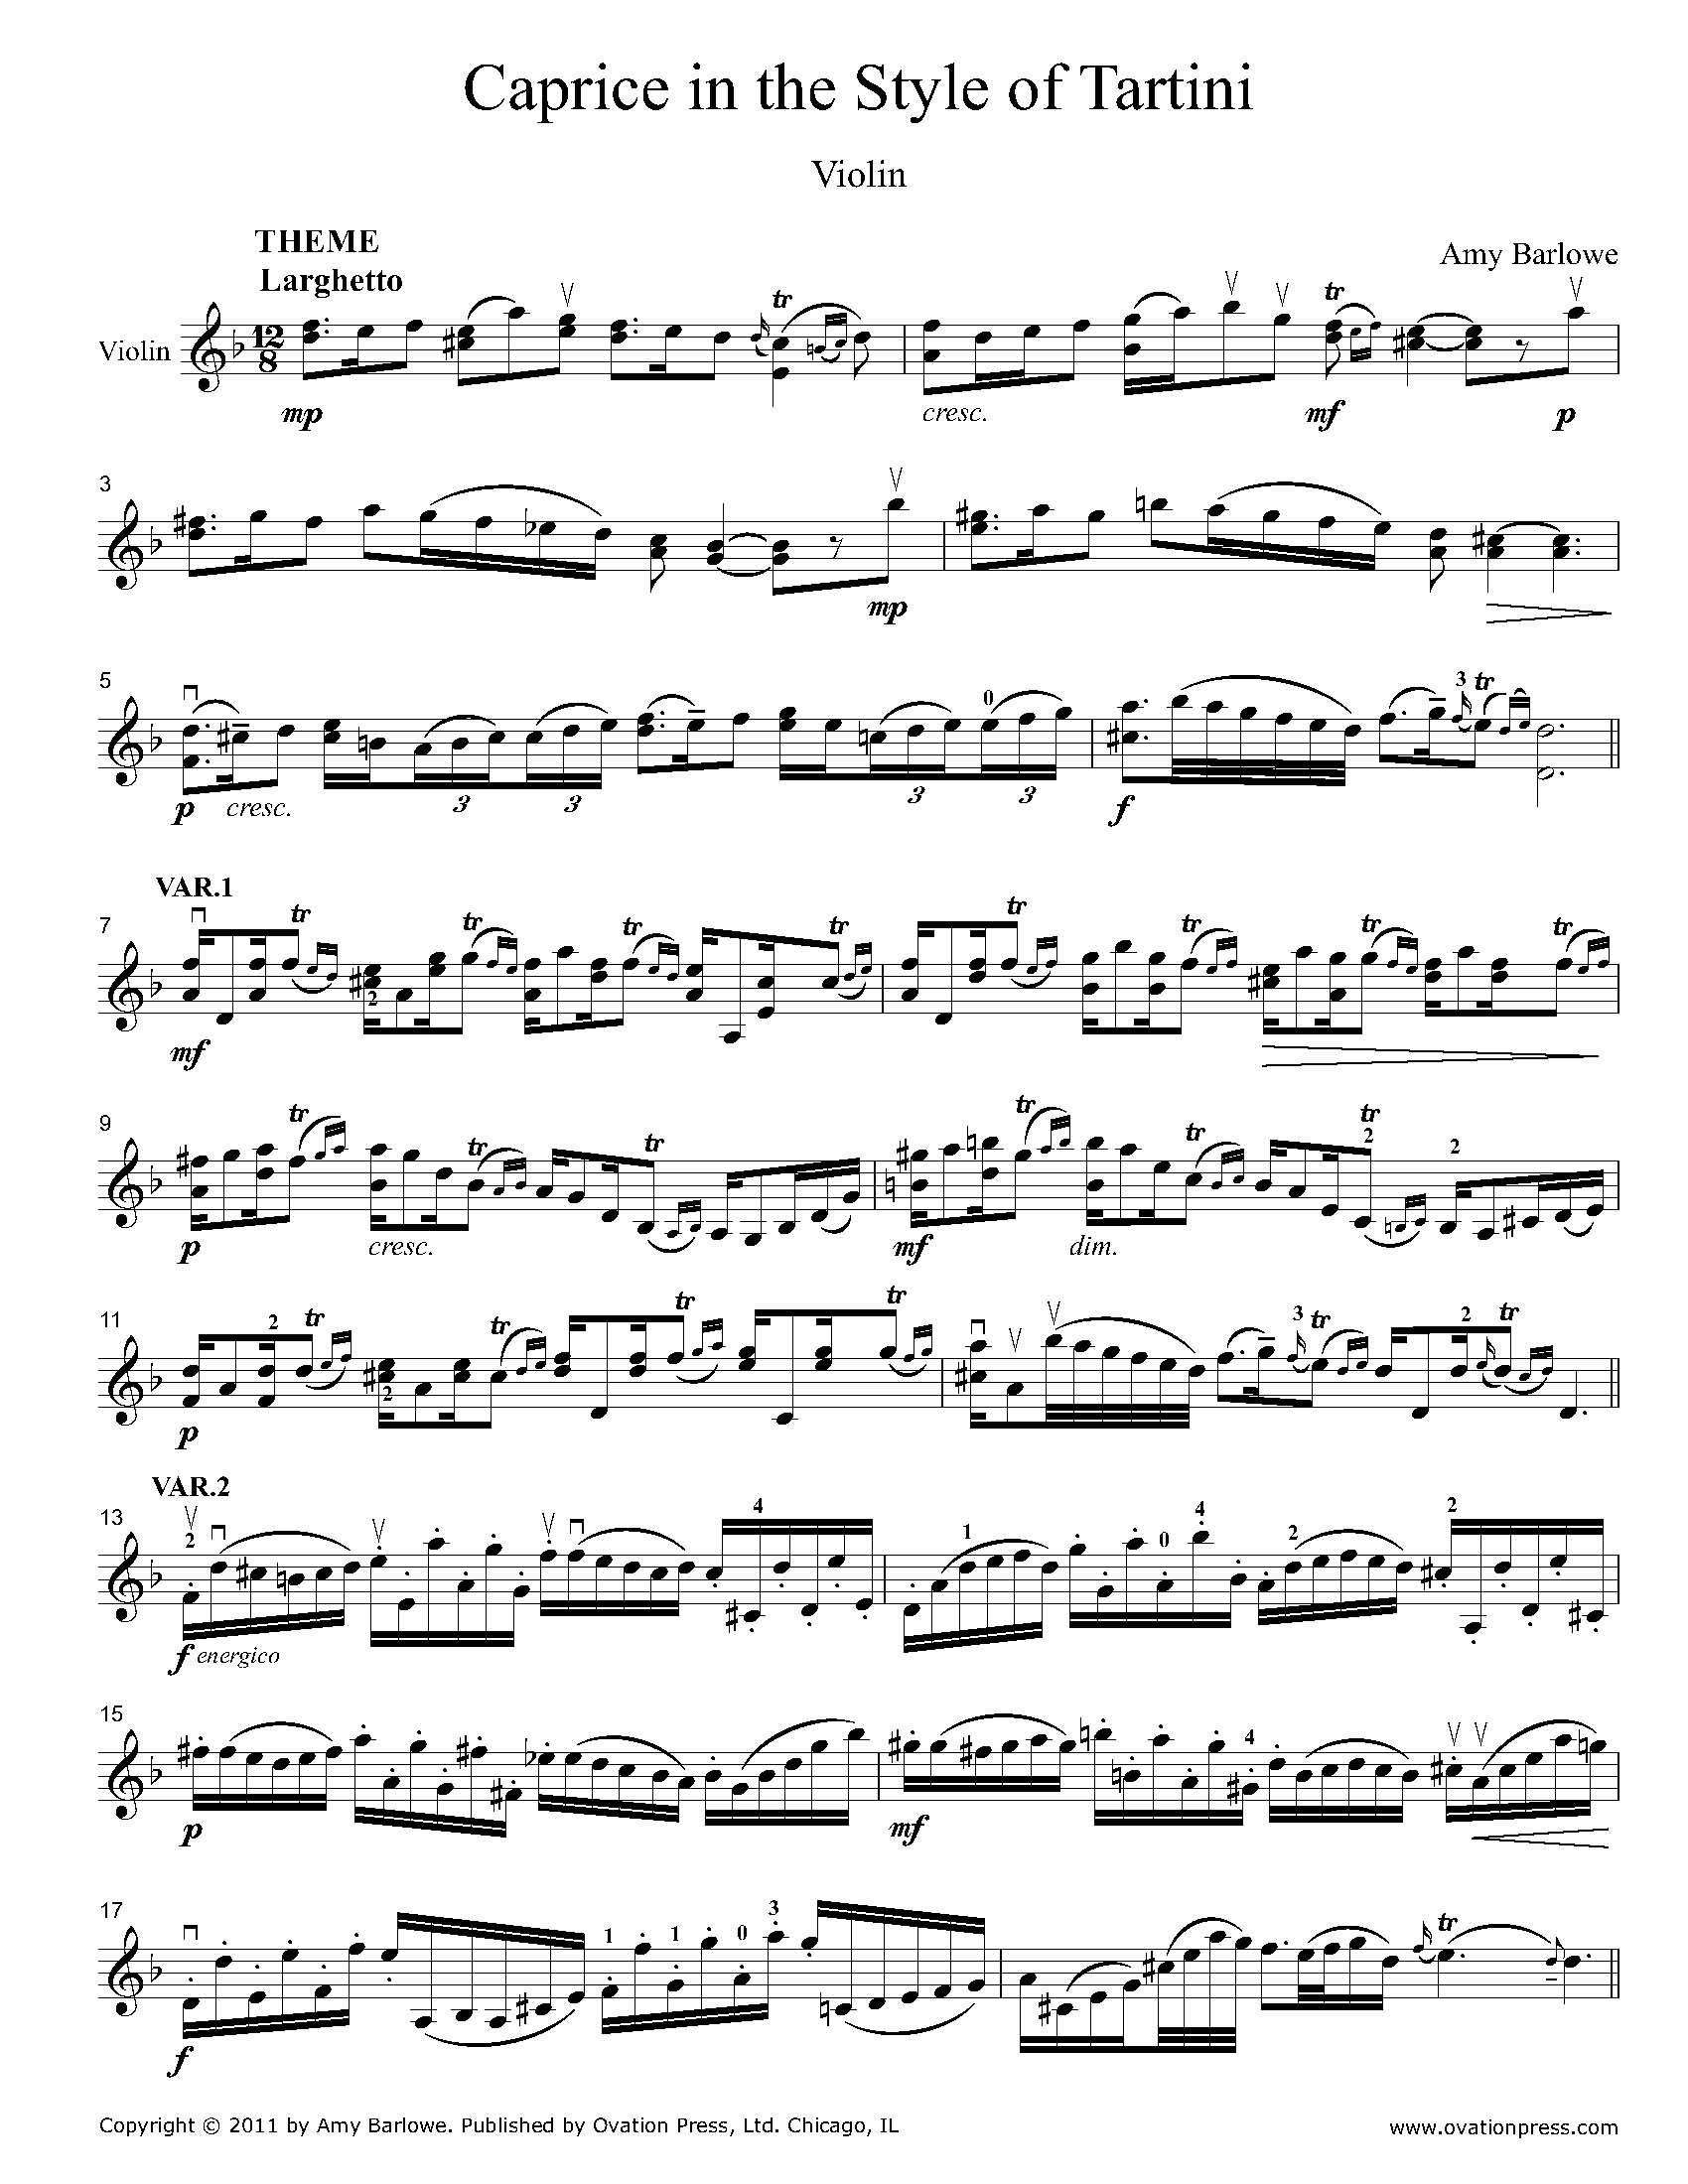 Caprice in the Style of Tartini for Violin